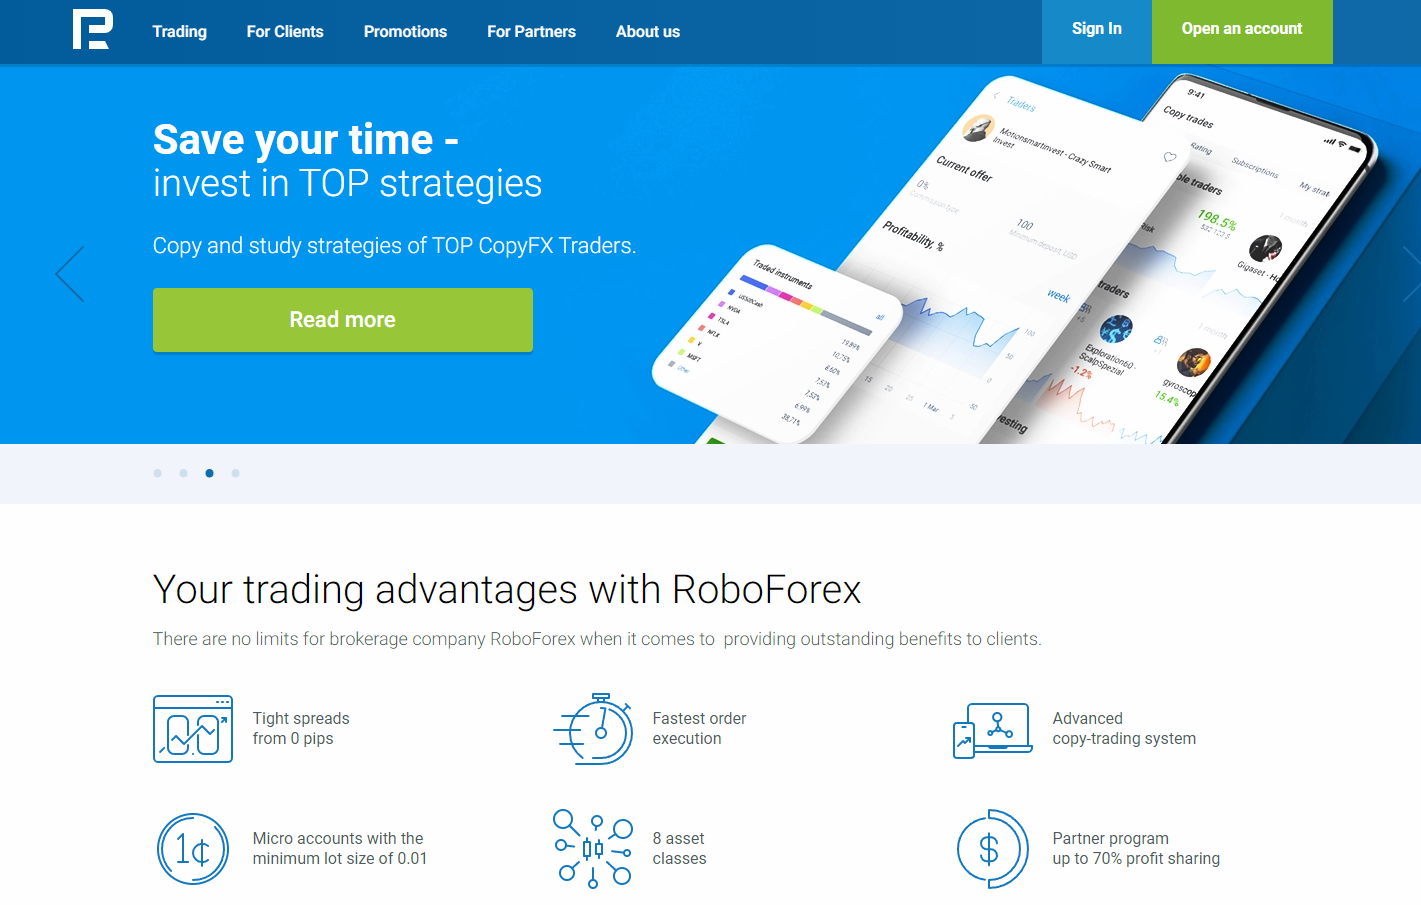 Sitio web oficial de RoboForex